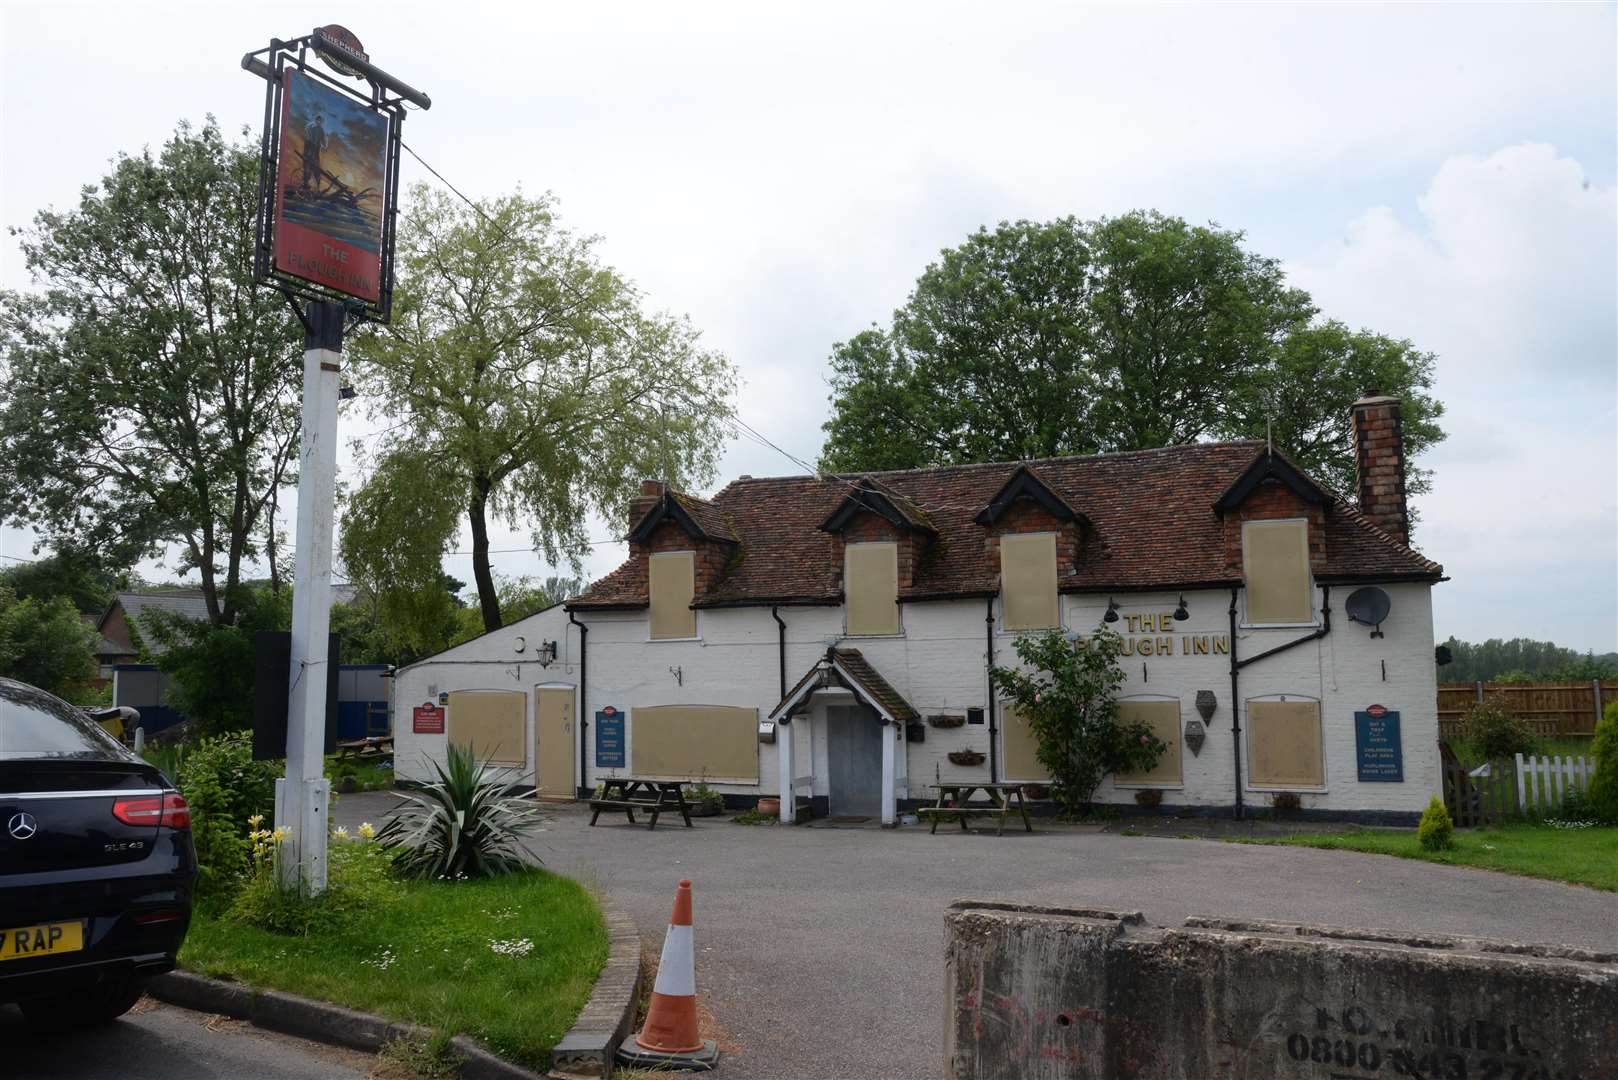 The Plough Inn. Picture: Chris Davey